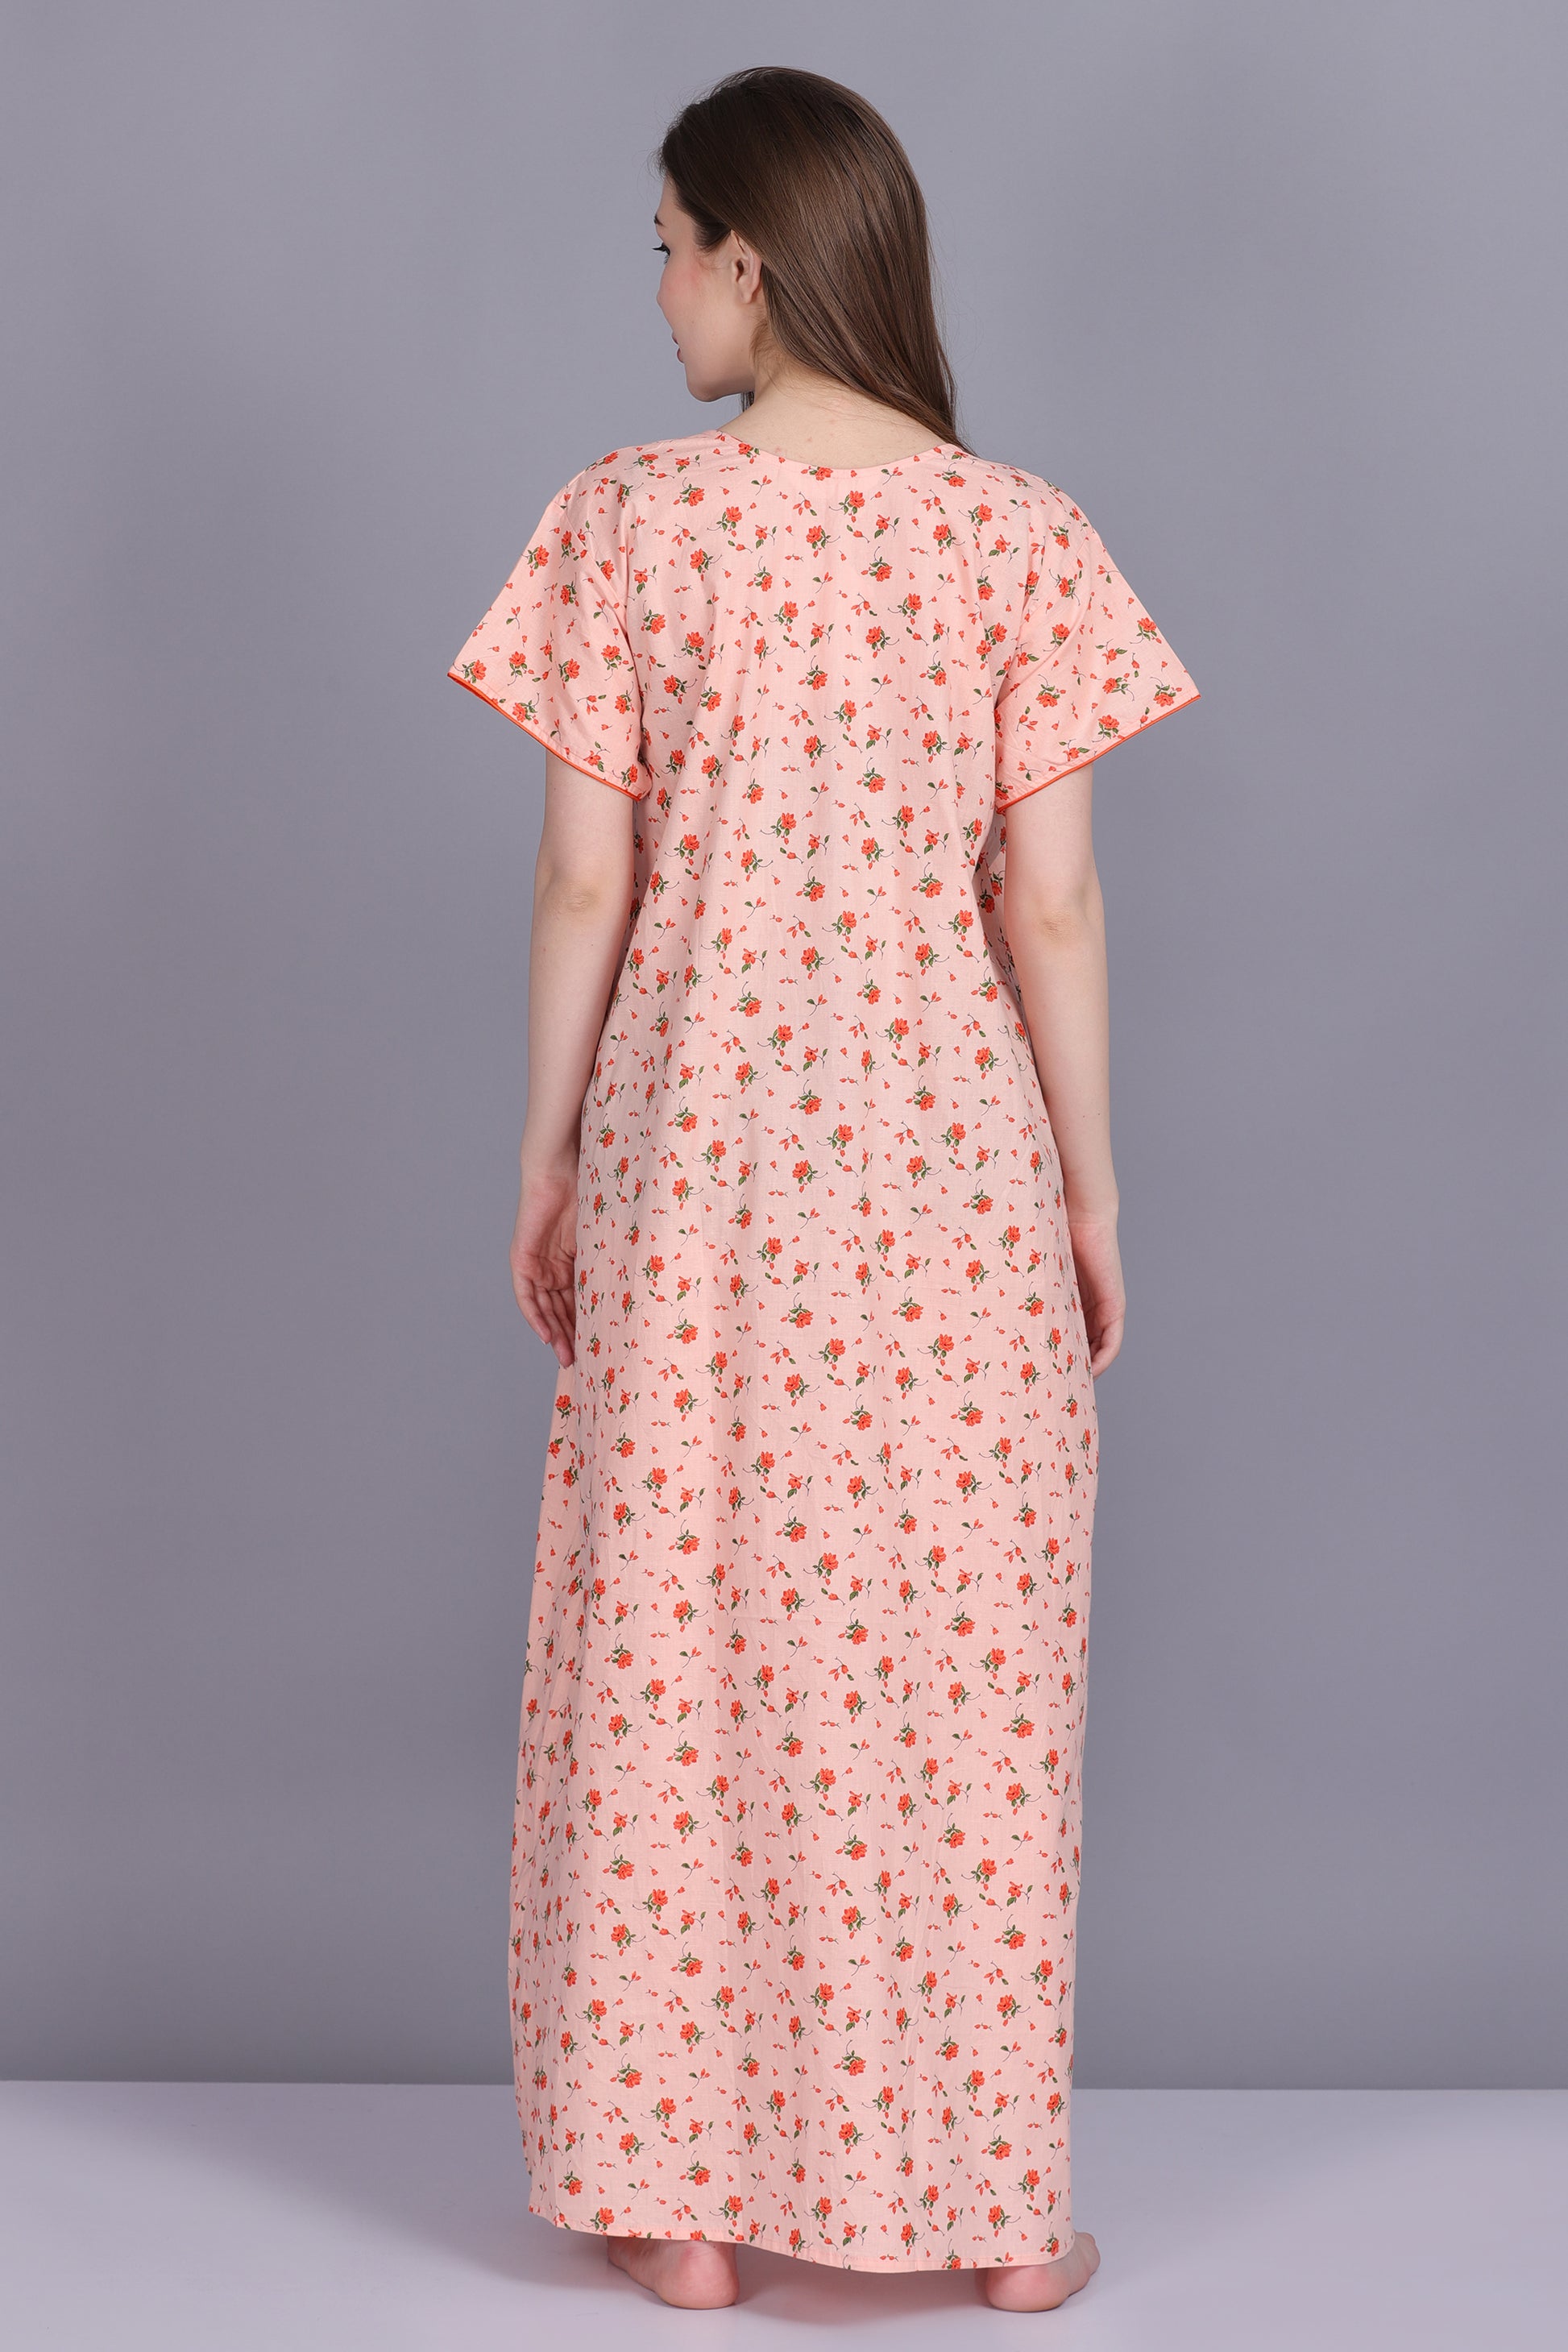 Women's Cotton Nighty Batik Print Maxi Soft Fabric Nightgown,Sleepwear  Comfortable,wear for Women( Multicolor Pack of 4) combo-NT0-1